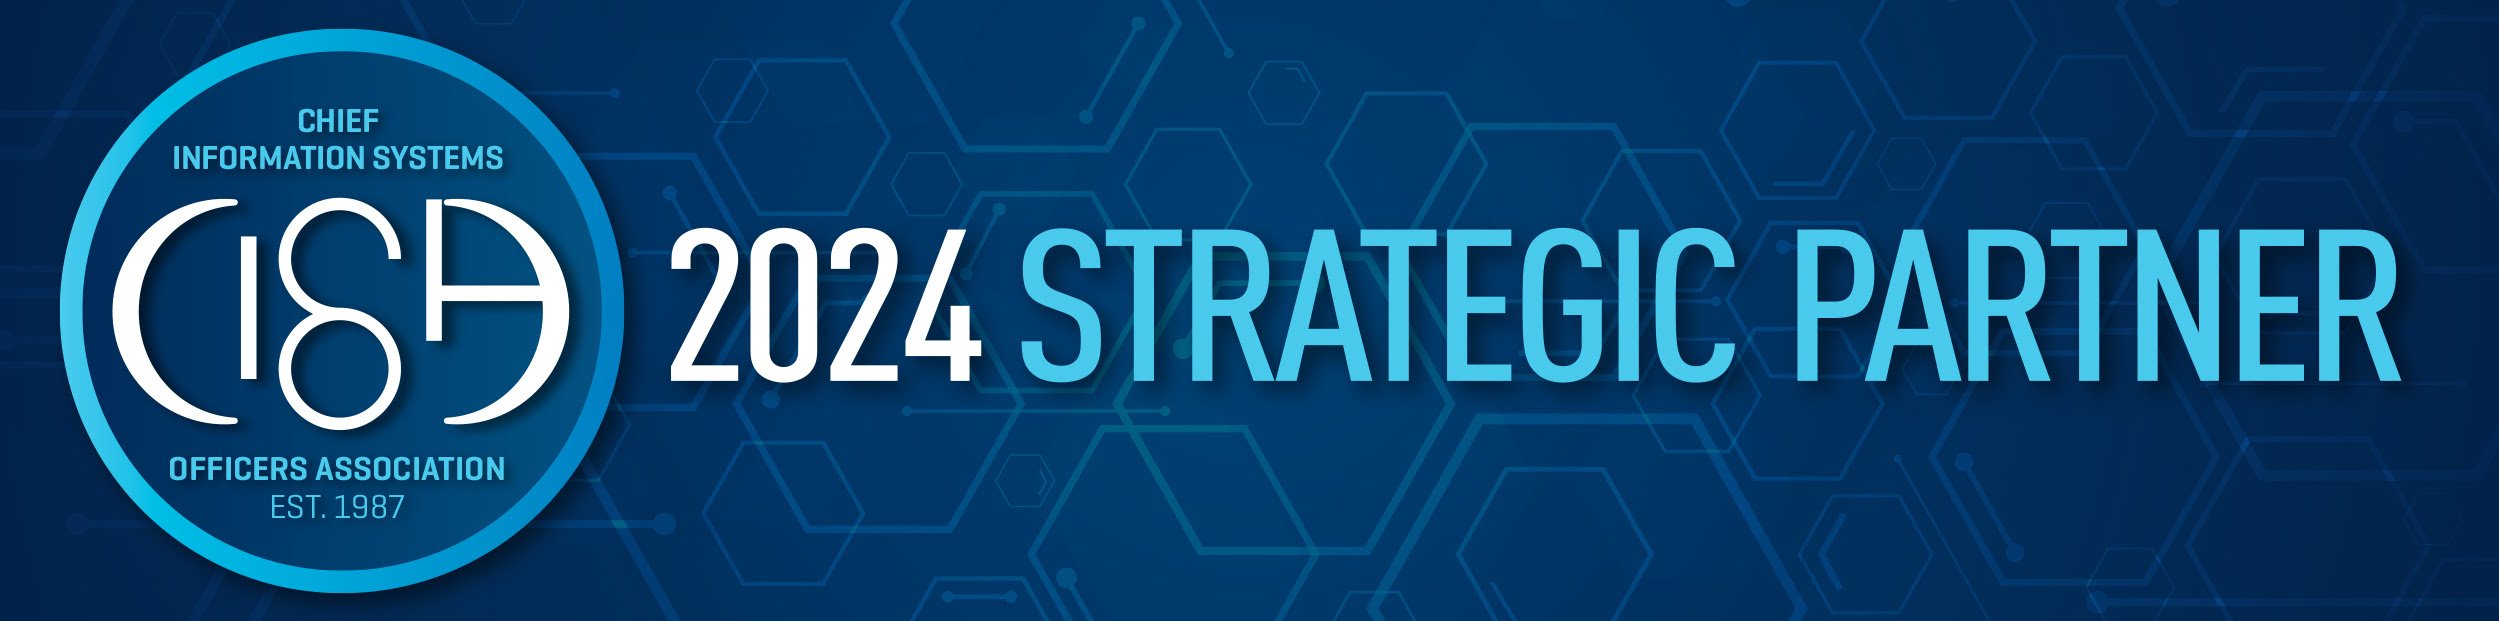 CISOA-2024_strategic_partner